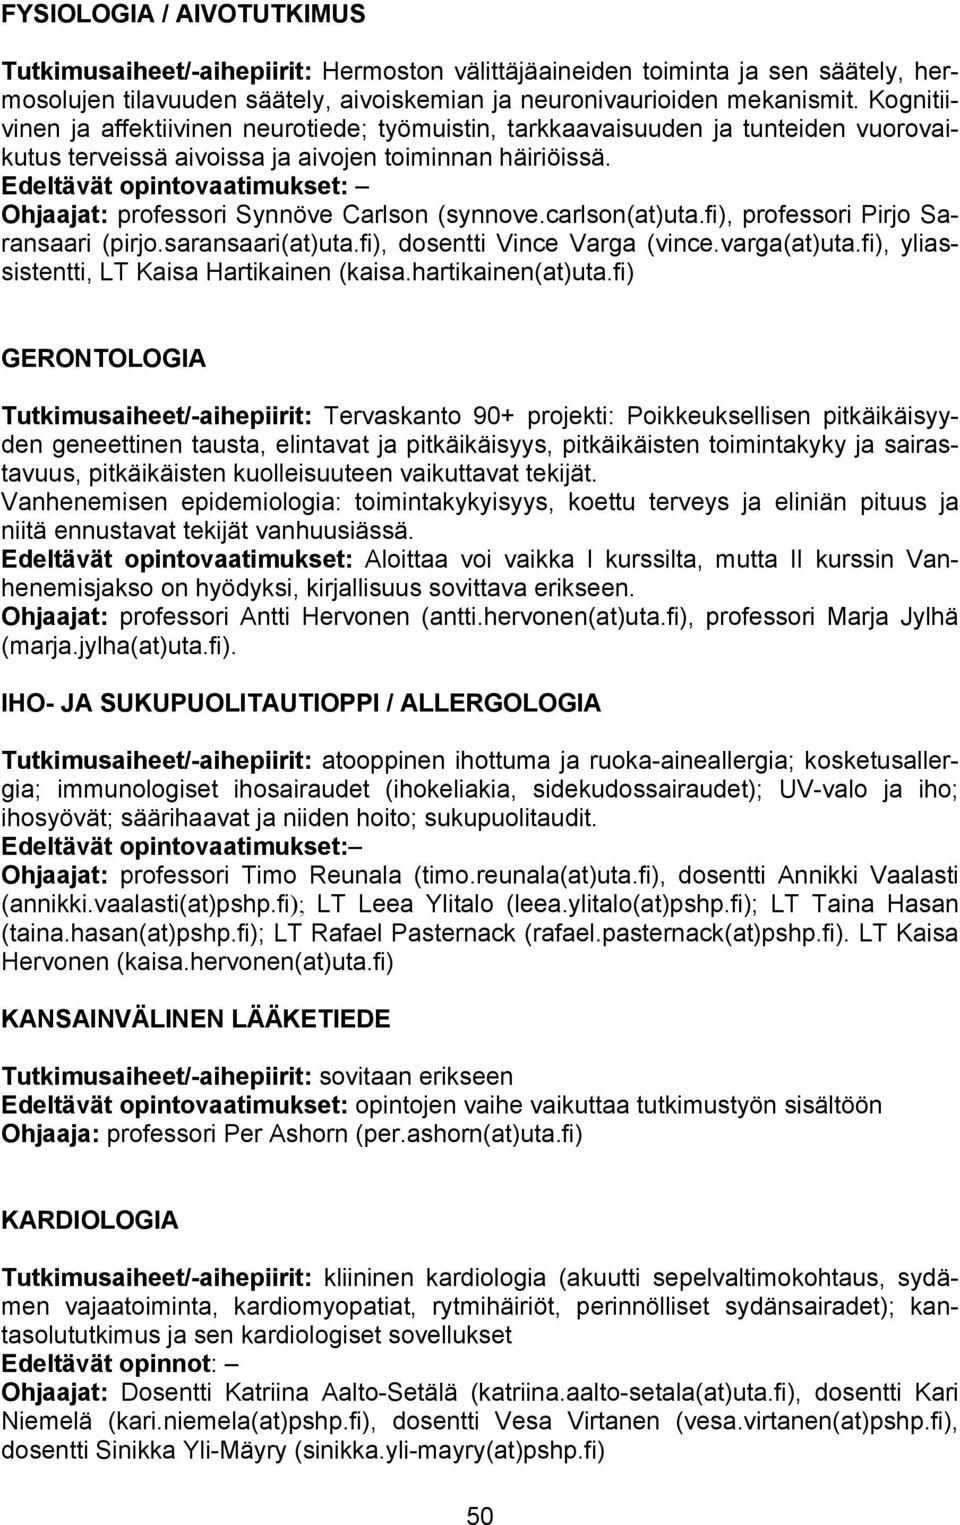 carlson(at)uta.fi), professori Pirjo Saransaari (pirjo.saransaari(at)uta.fi), dosentti Vince Varga (vince.varga(at)uta.fi), yliassistentti, LT Kaisa Hartikainen (kaisa.hartikainen(at)uta.